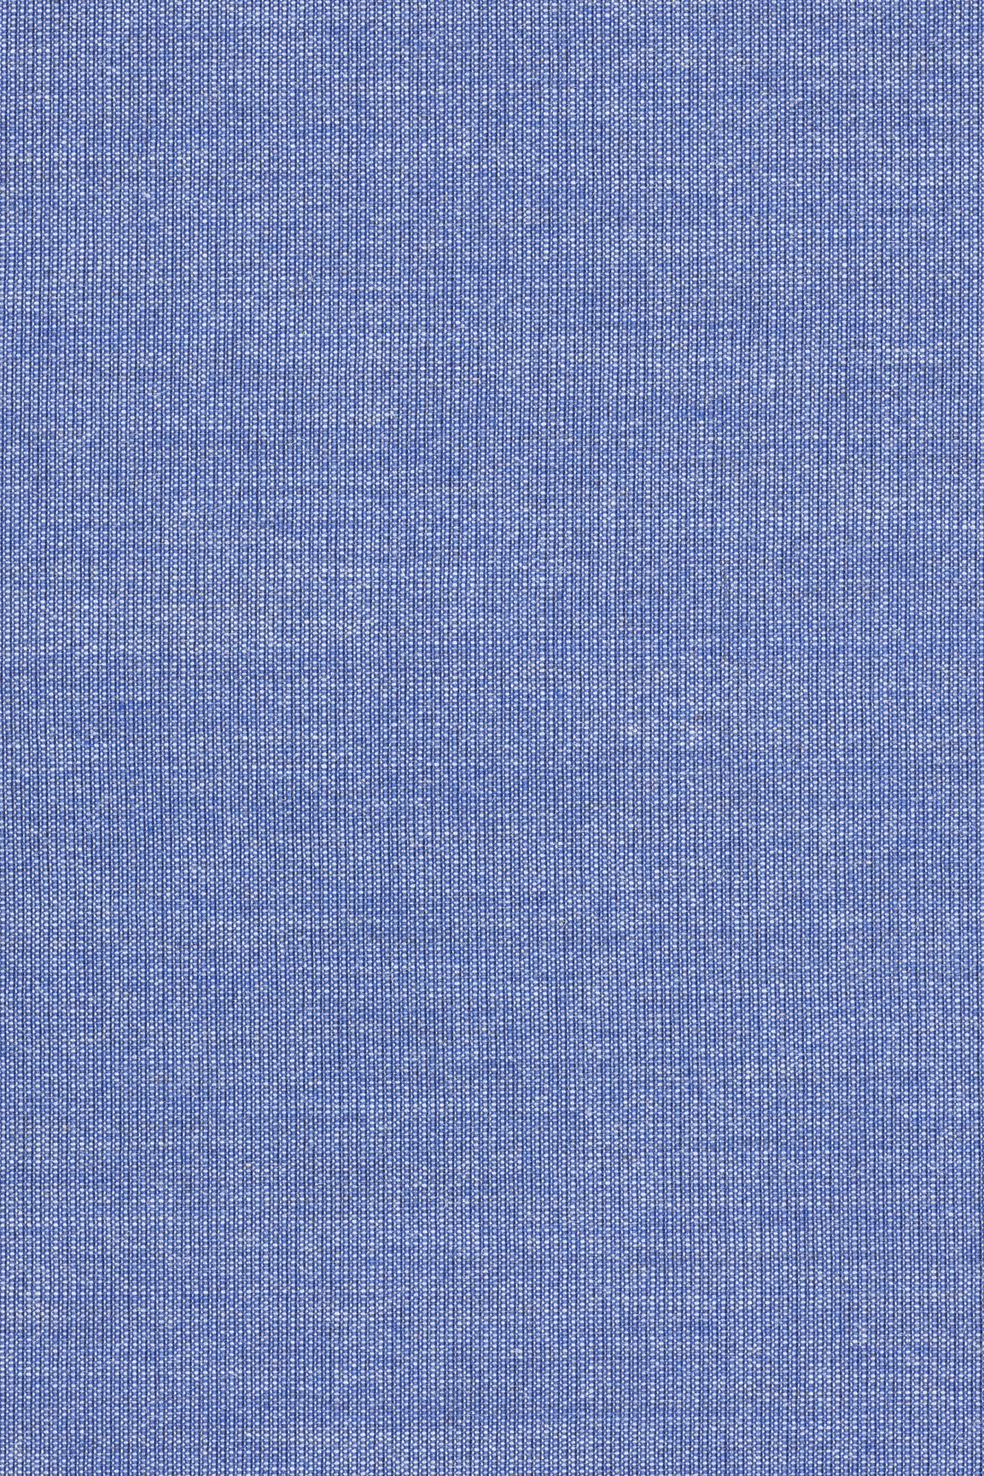 Fabric sample Canvas 2 726 blue